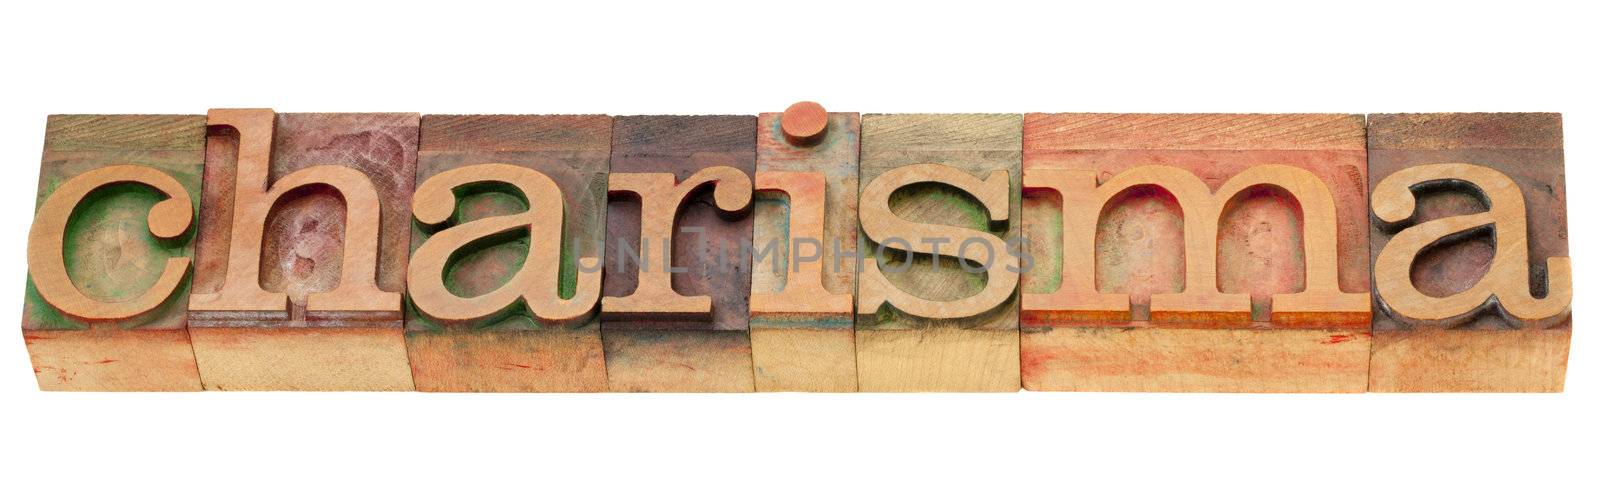 charisma - isolated word in vintage wood letterpress printing blocks